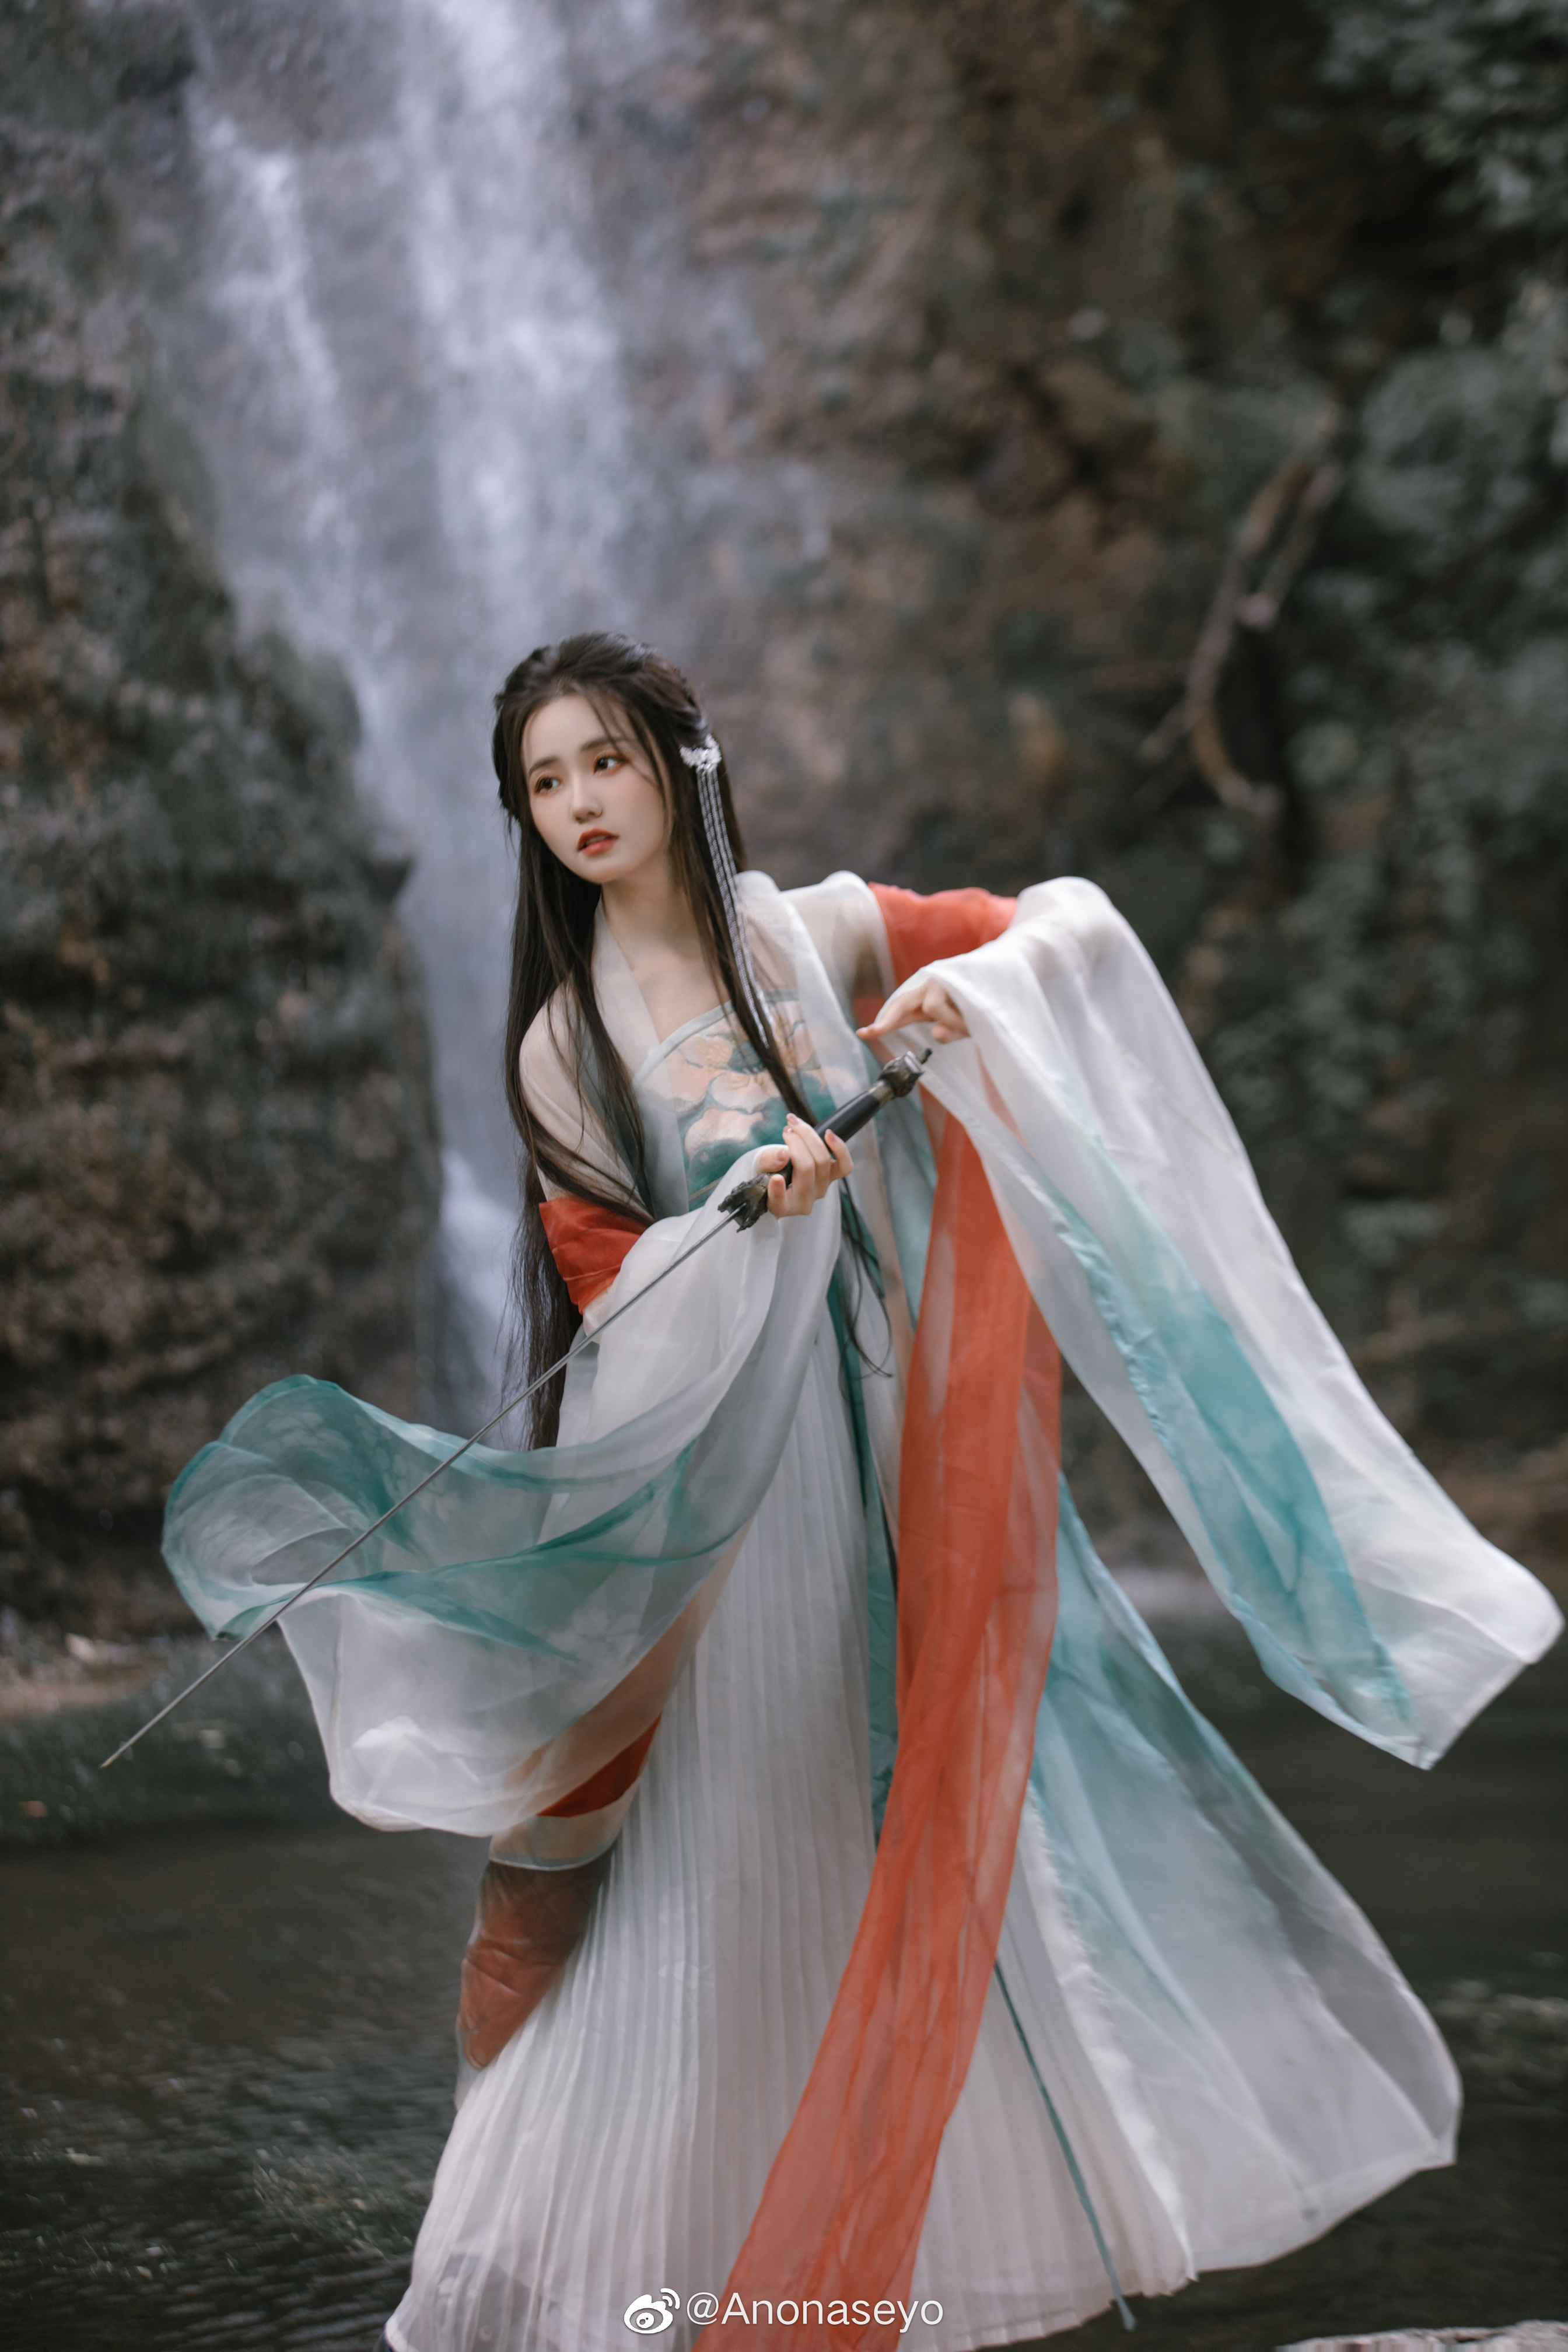 Women Asian Women With Swords Chinese Dress Waterfall 2688x4032